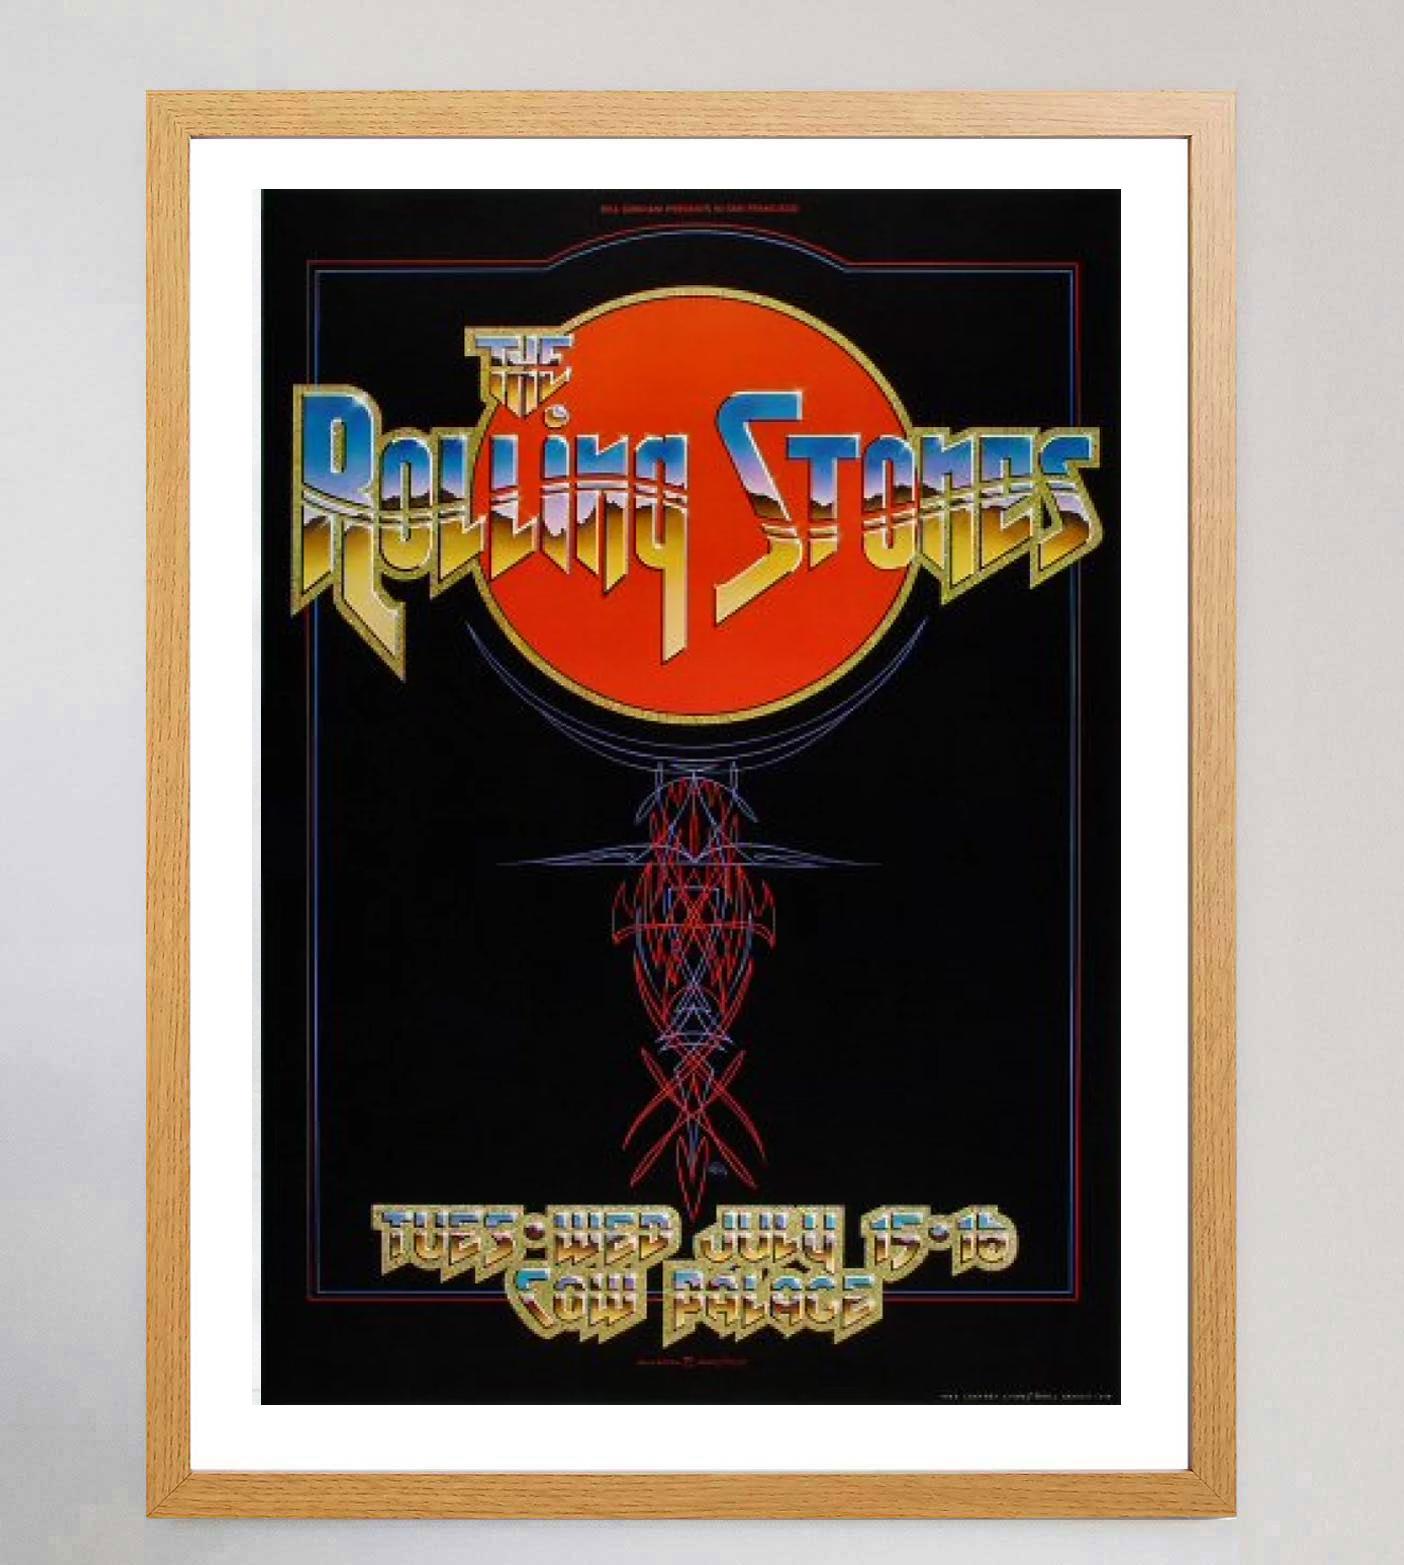 1975 Rolling Stones - Live at Cow Palace, Original-Vintage-Poster (amerikanisch) im Angebot